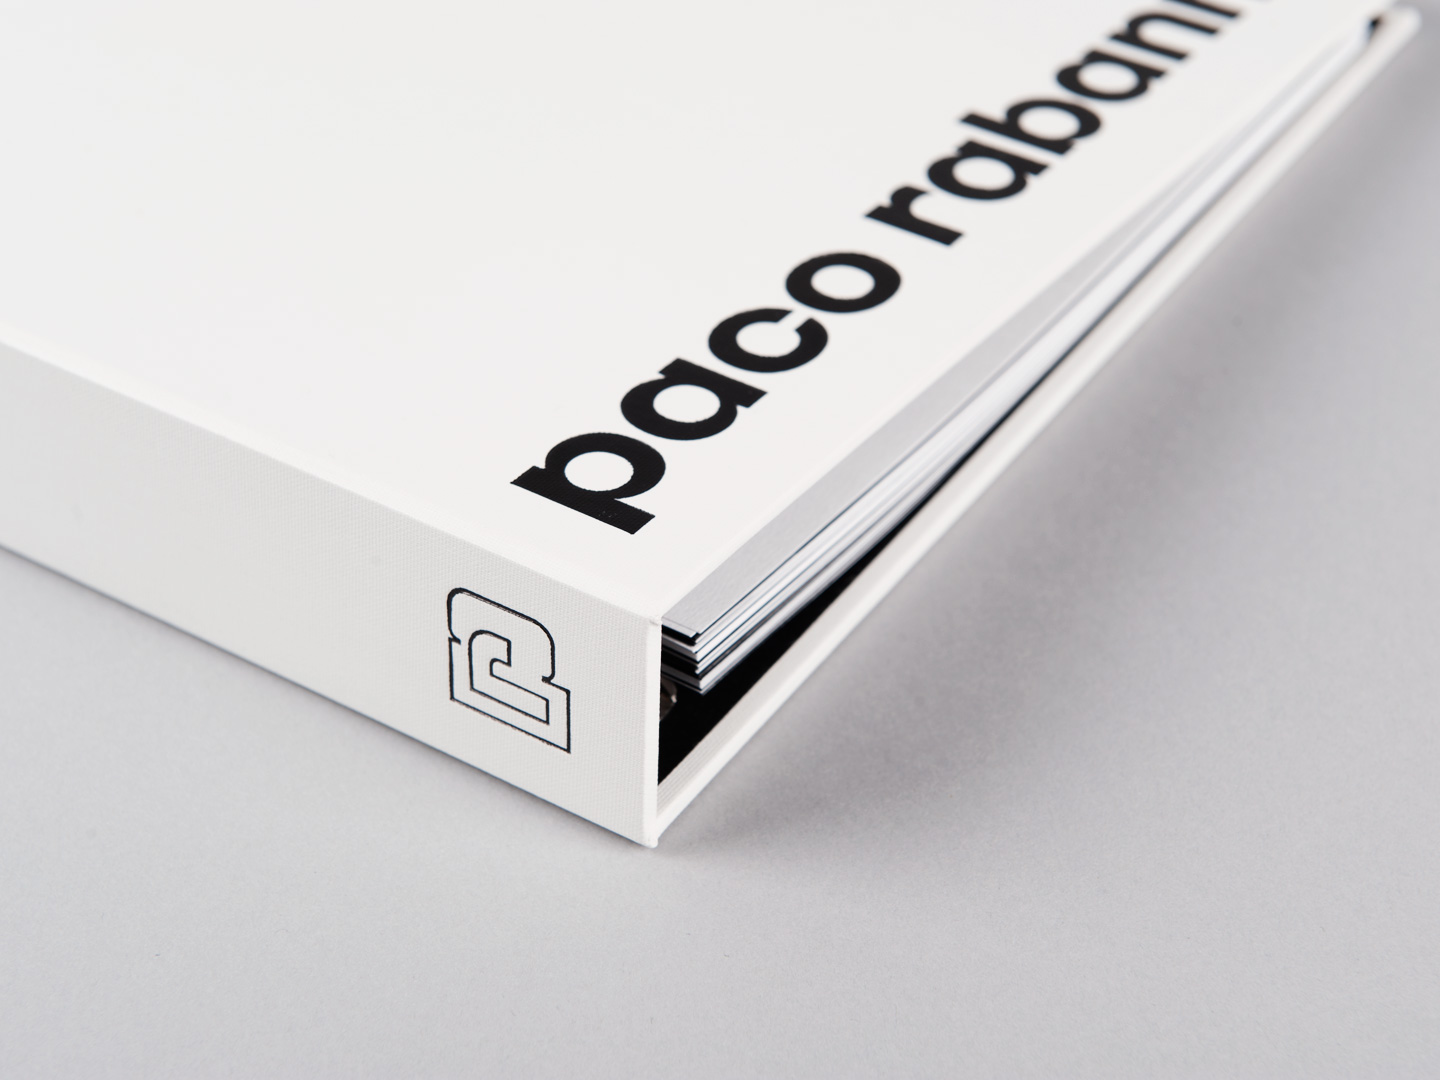 Brand identity document for French fashion label Paco Rabanne by Zak Group, United Kingdom